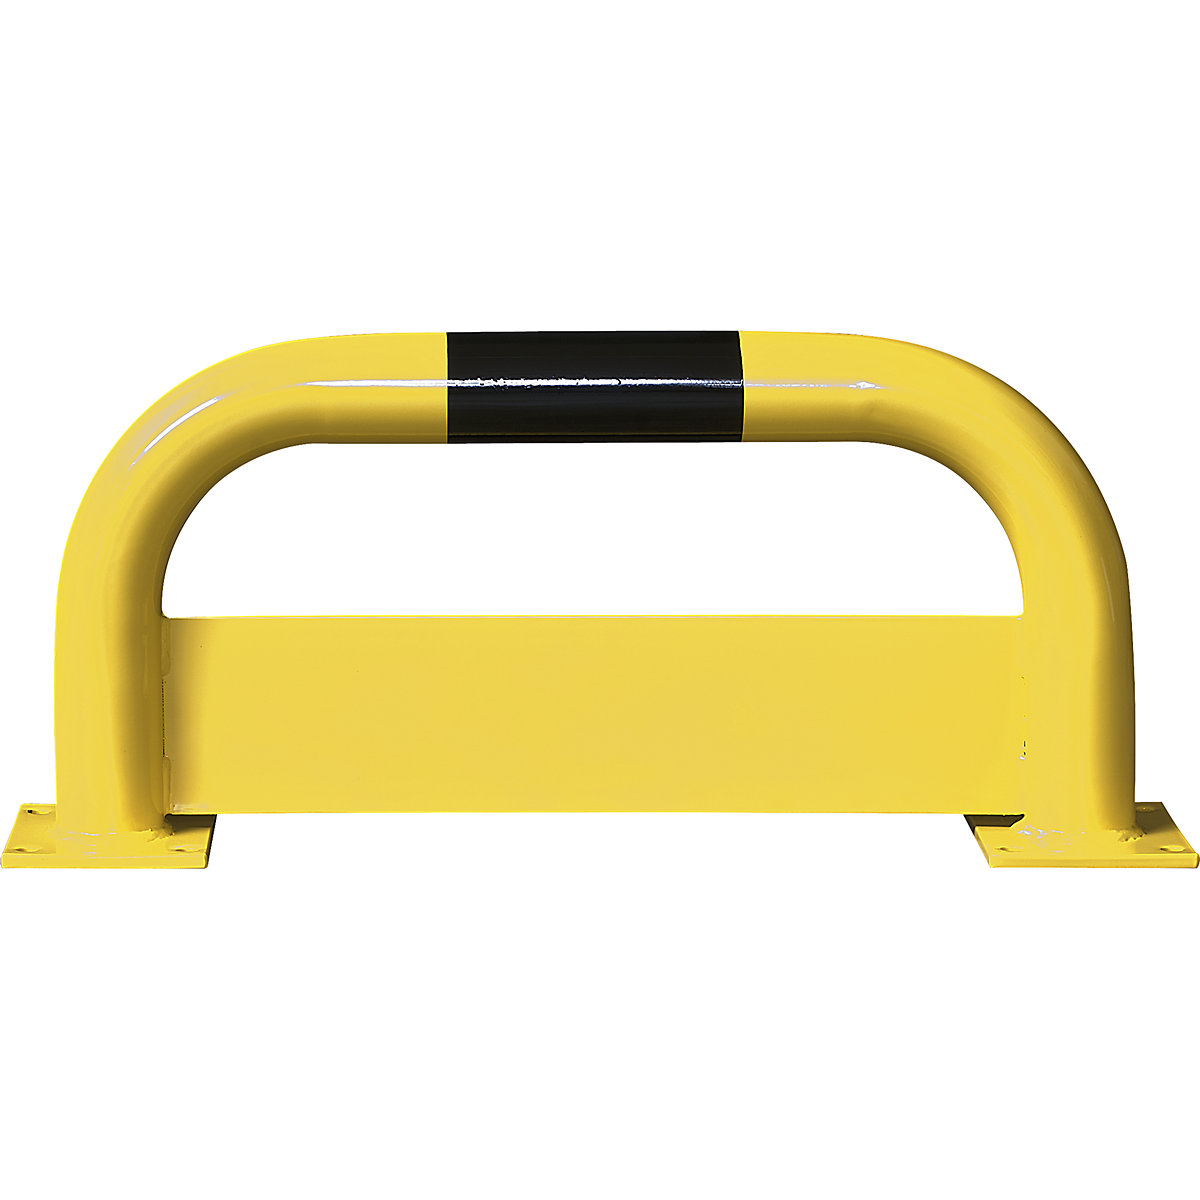 Crash protection bar, forklift guard 150 mm, HxW 350 x 750 mm